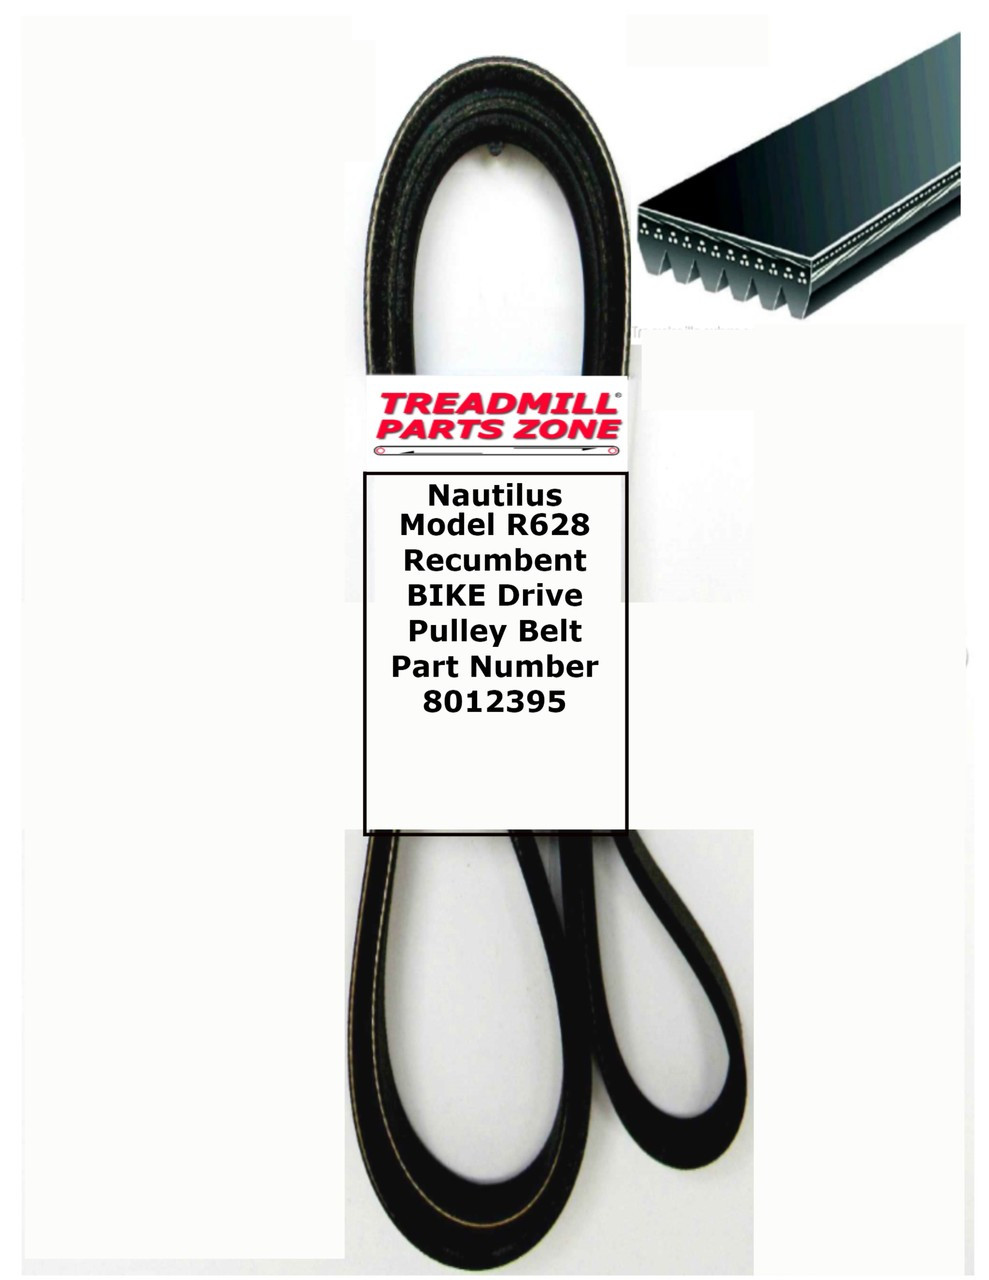 Nautilus Model R628 Recumbent BIKE Drive Pulley Belt Part Number 8012395